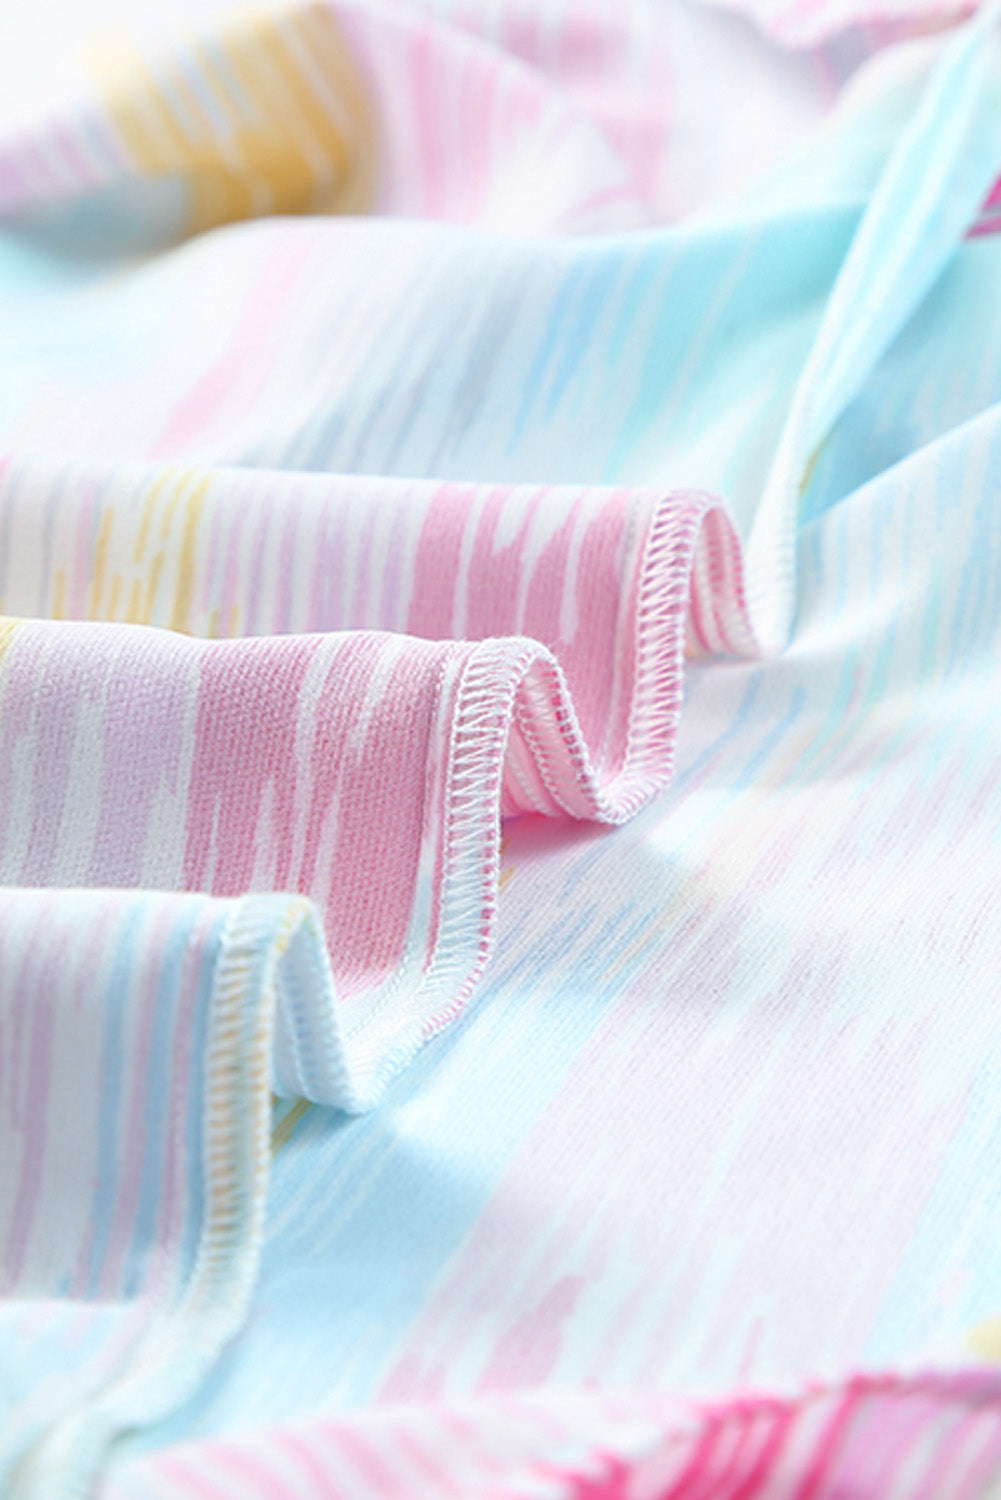 Rožnata bluza z abstraktnim potiskom z V izrezom